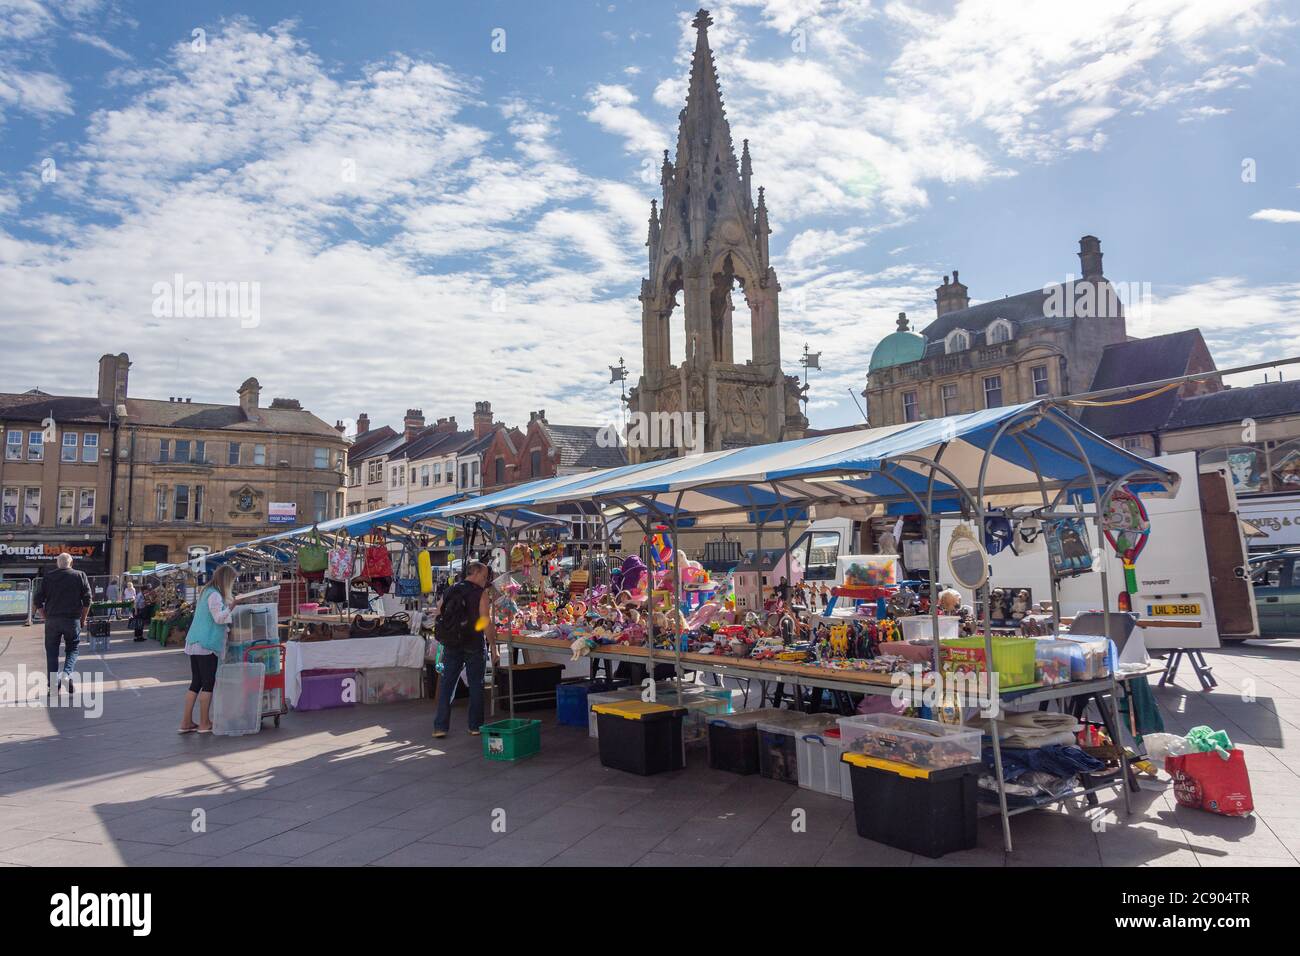 Marktstände am Markttag, Marktplatz, Mansfield, Nottinghamshire, England, Großbritannien Stockfoto